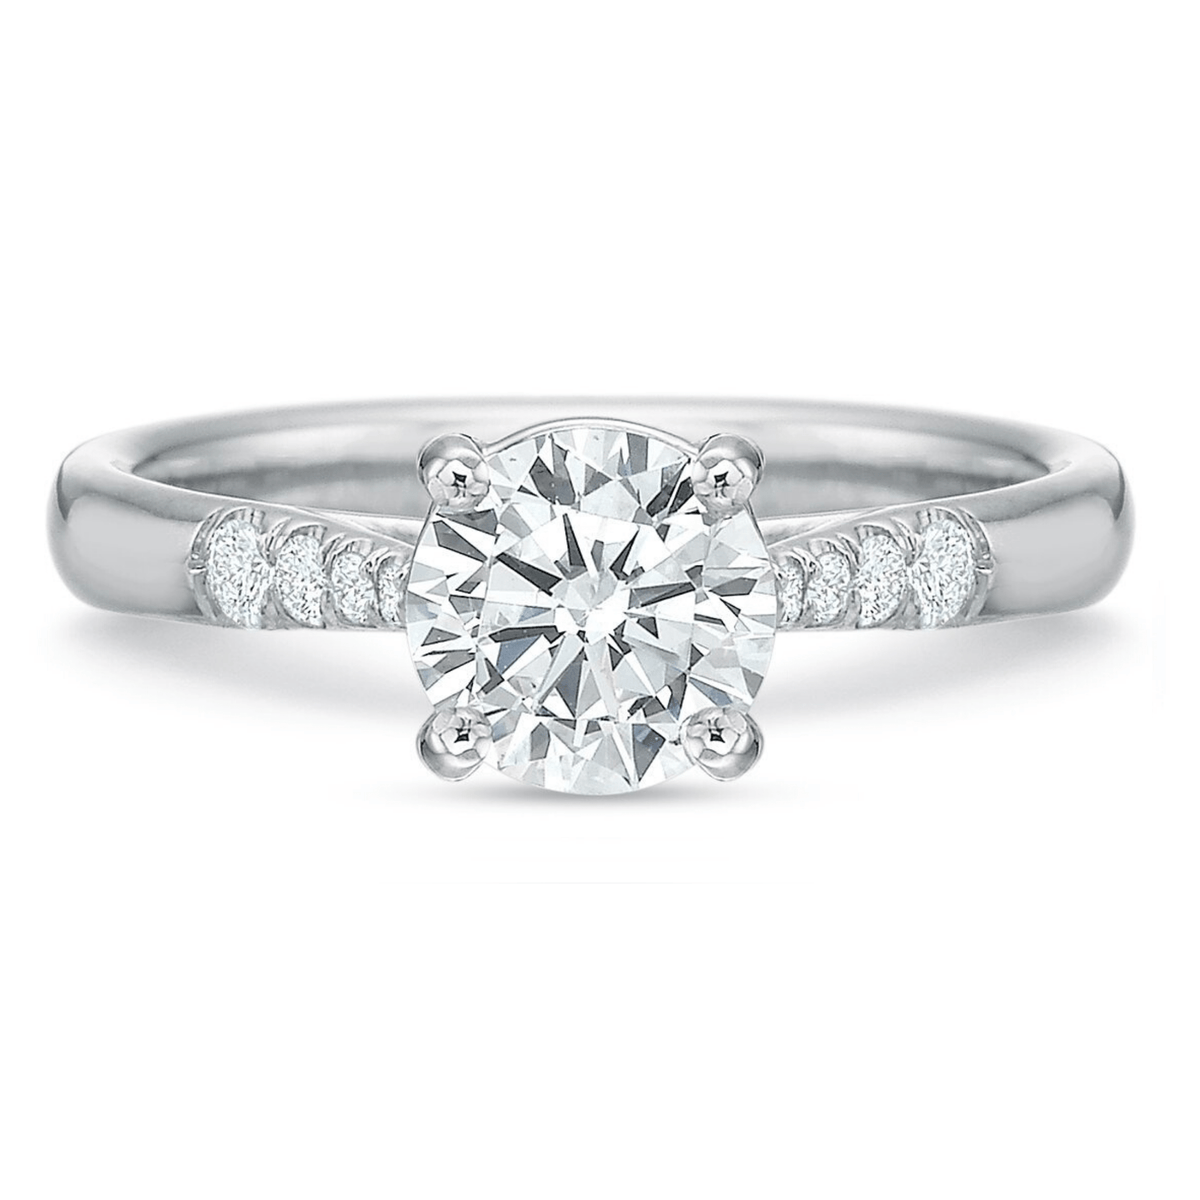 Platinum New Aire Petite Graduated Shank Engagement Ring Setting